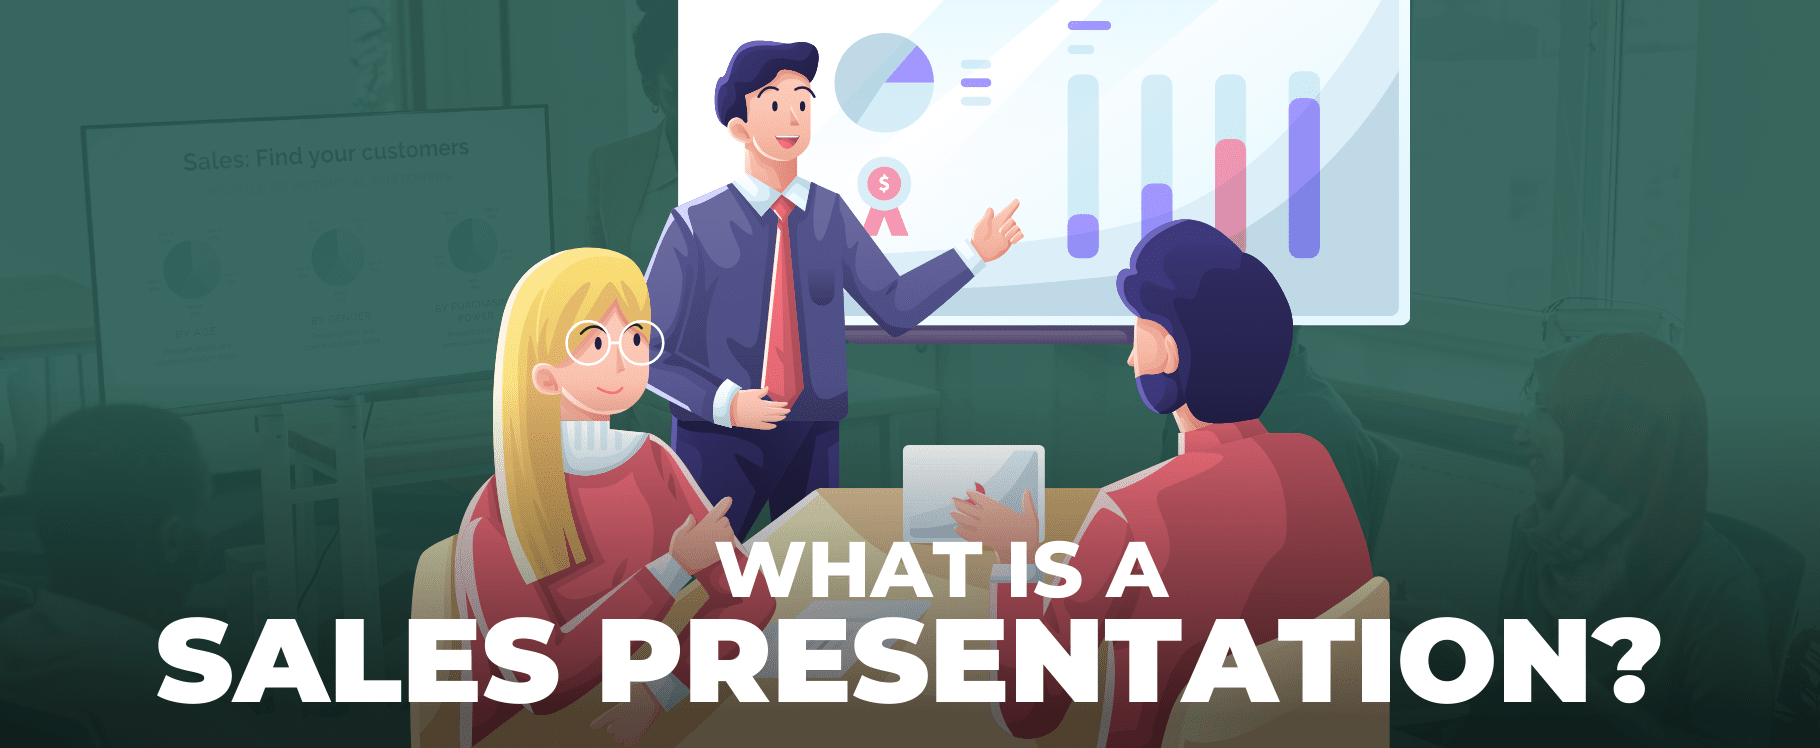 sales presentation definition